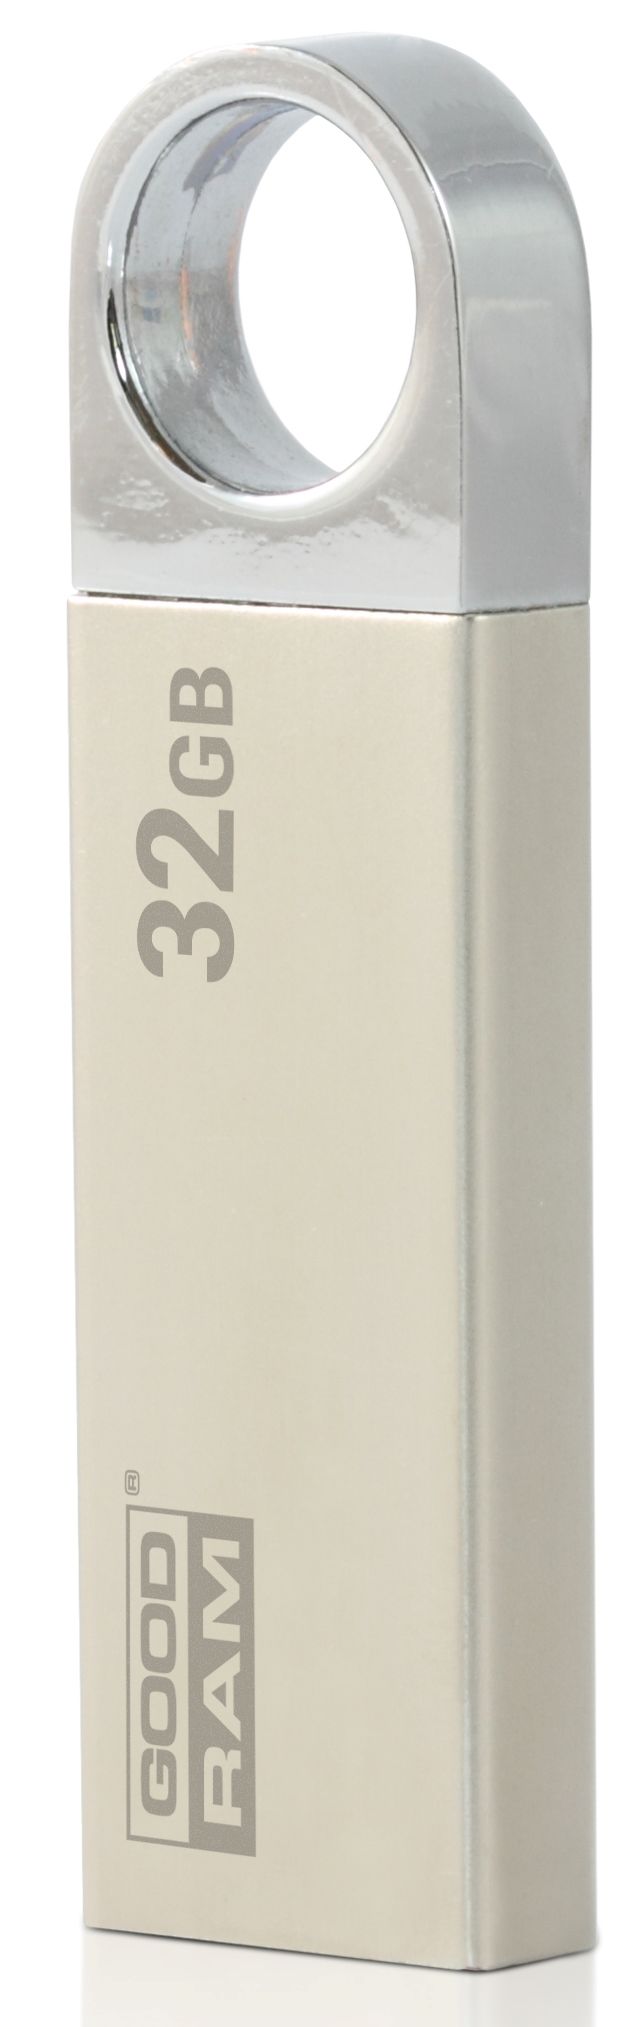 Flash-пам'ять Goodram UUN2 64Gb USB 2.0 Silver | Купити в інтернет магазині